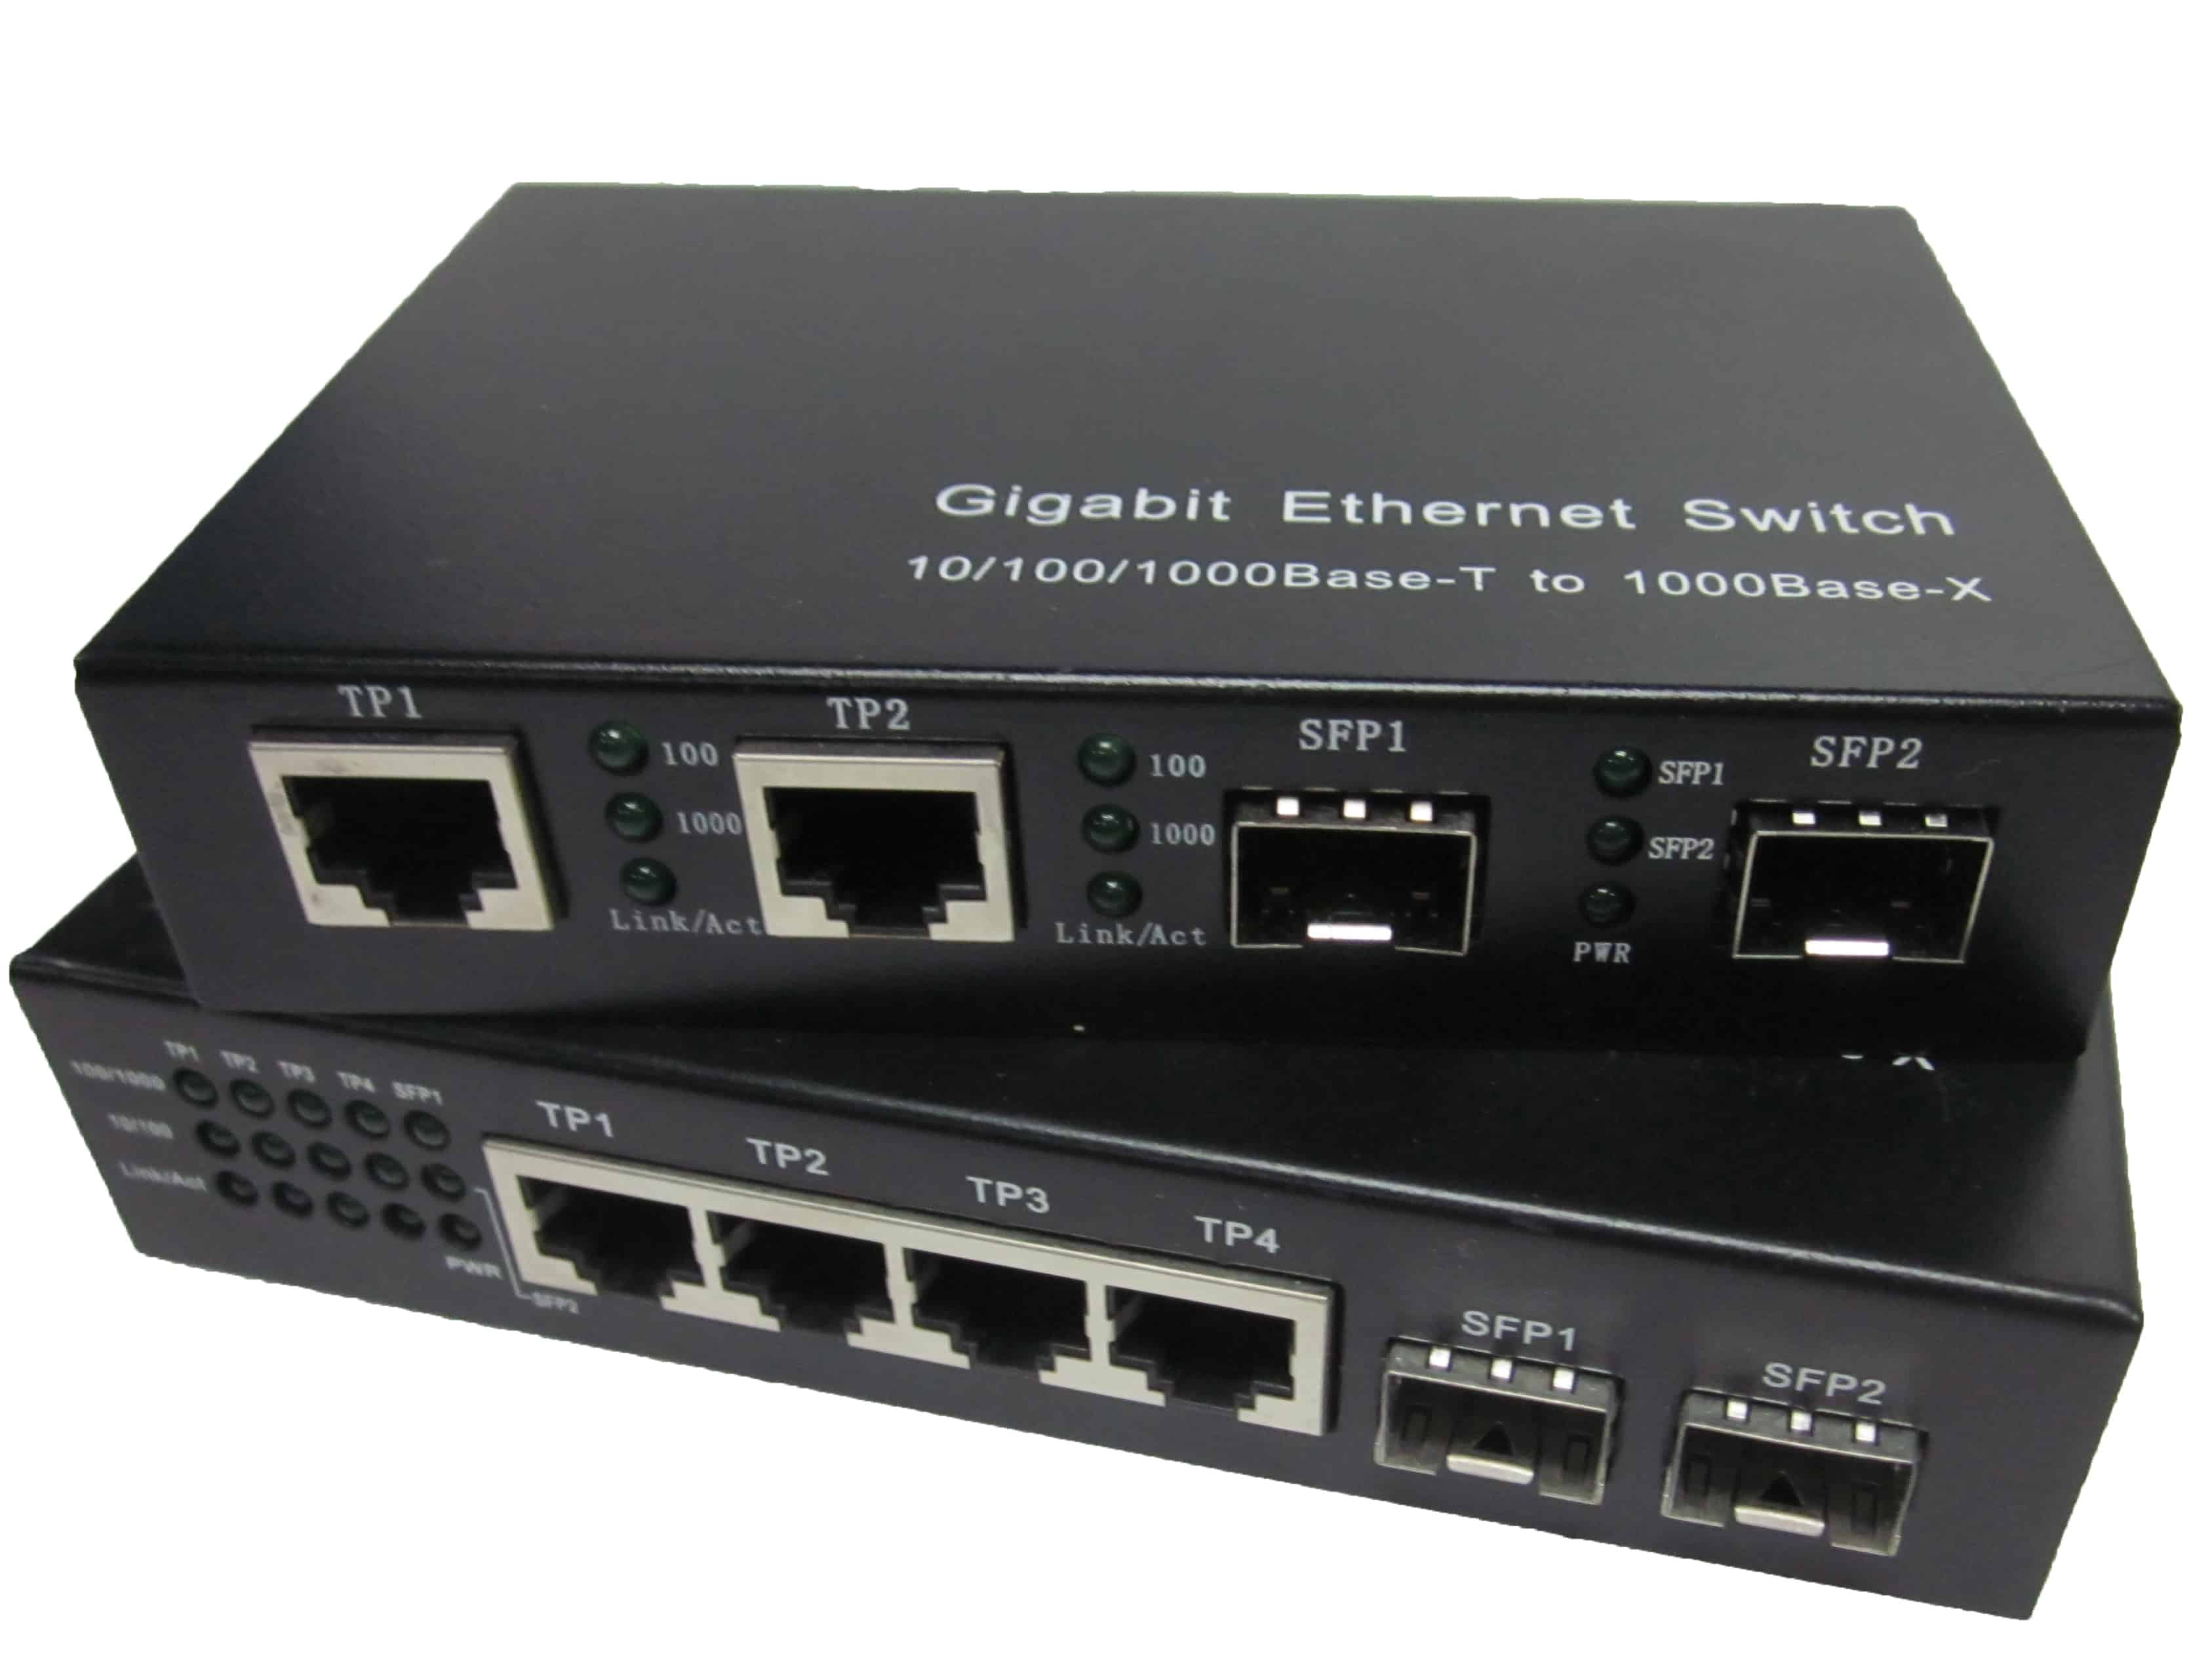 Wan 10. Ethernet 100base-TX. Порт Wan 10/100base-TX. Свитч cisc0 24 портовый + 3fsp. Свитч cisc0 27 портовый + 3fsp.